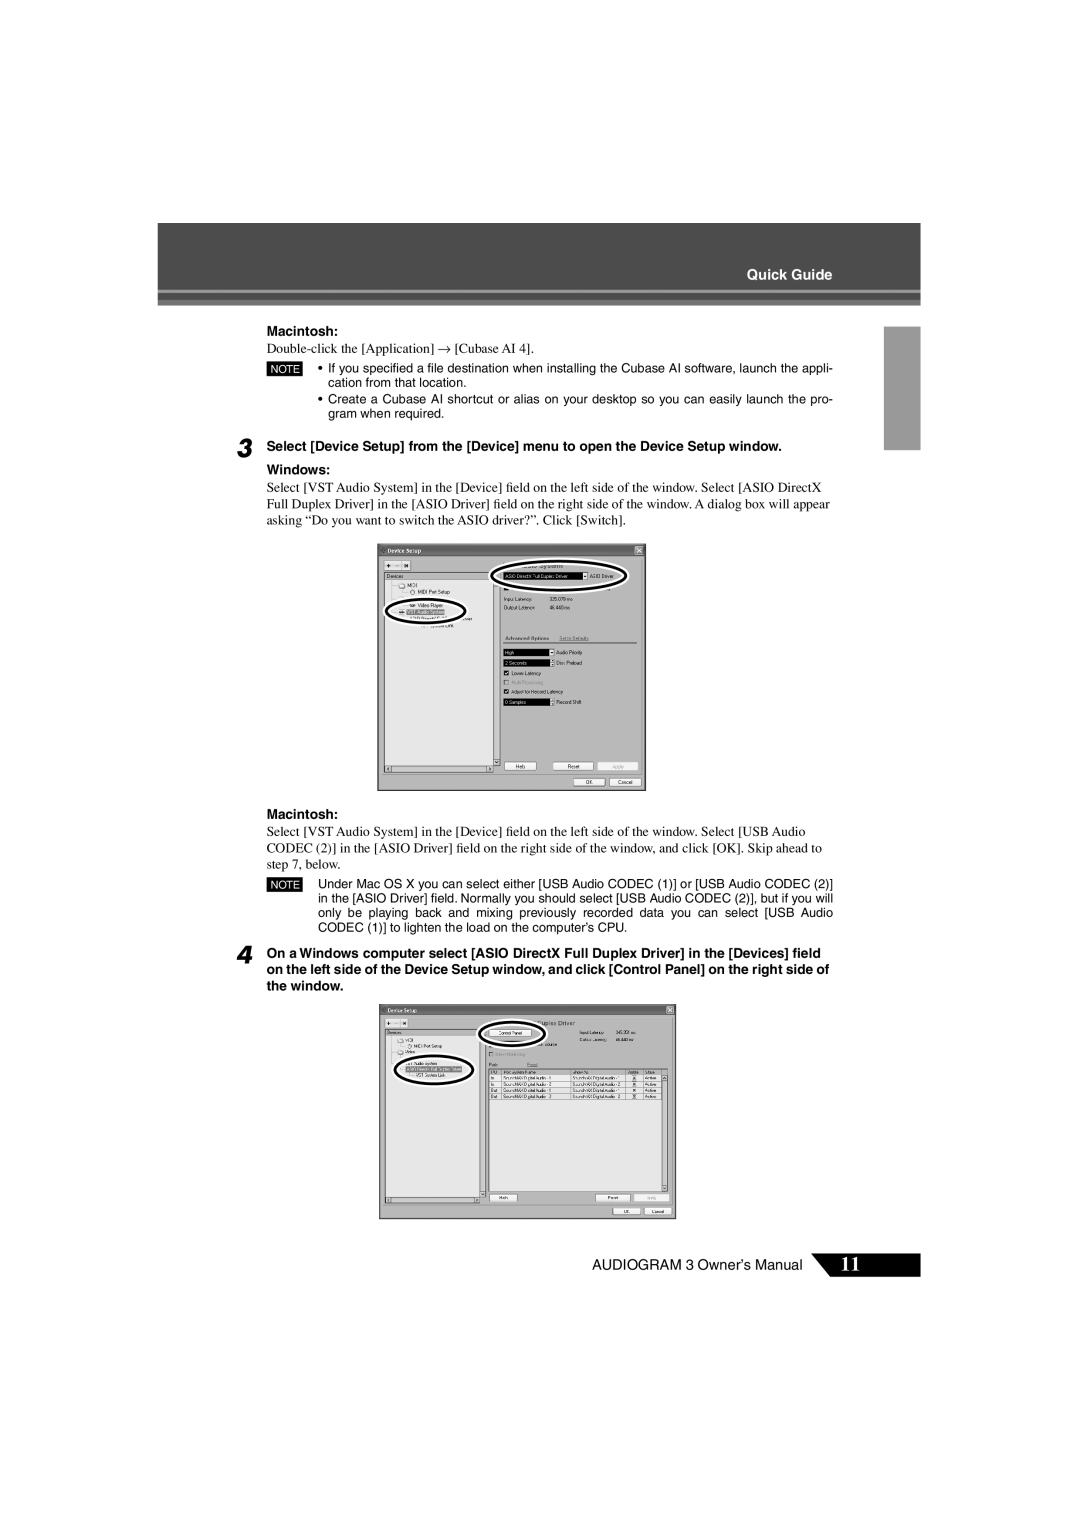 Yamaha Audiogram 3 owner manual Quick Guide, Macintosh 